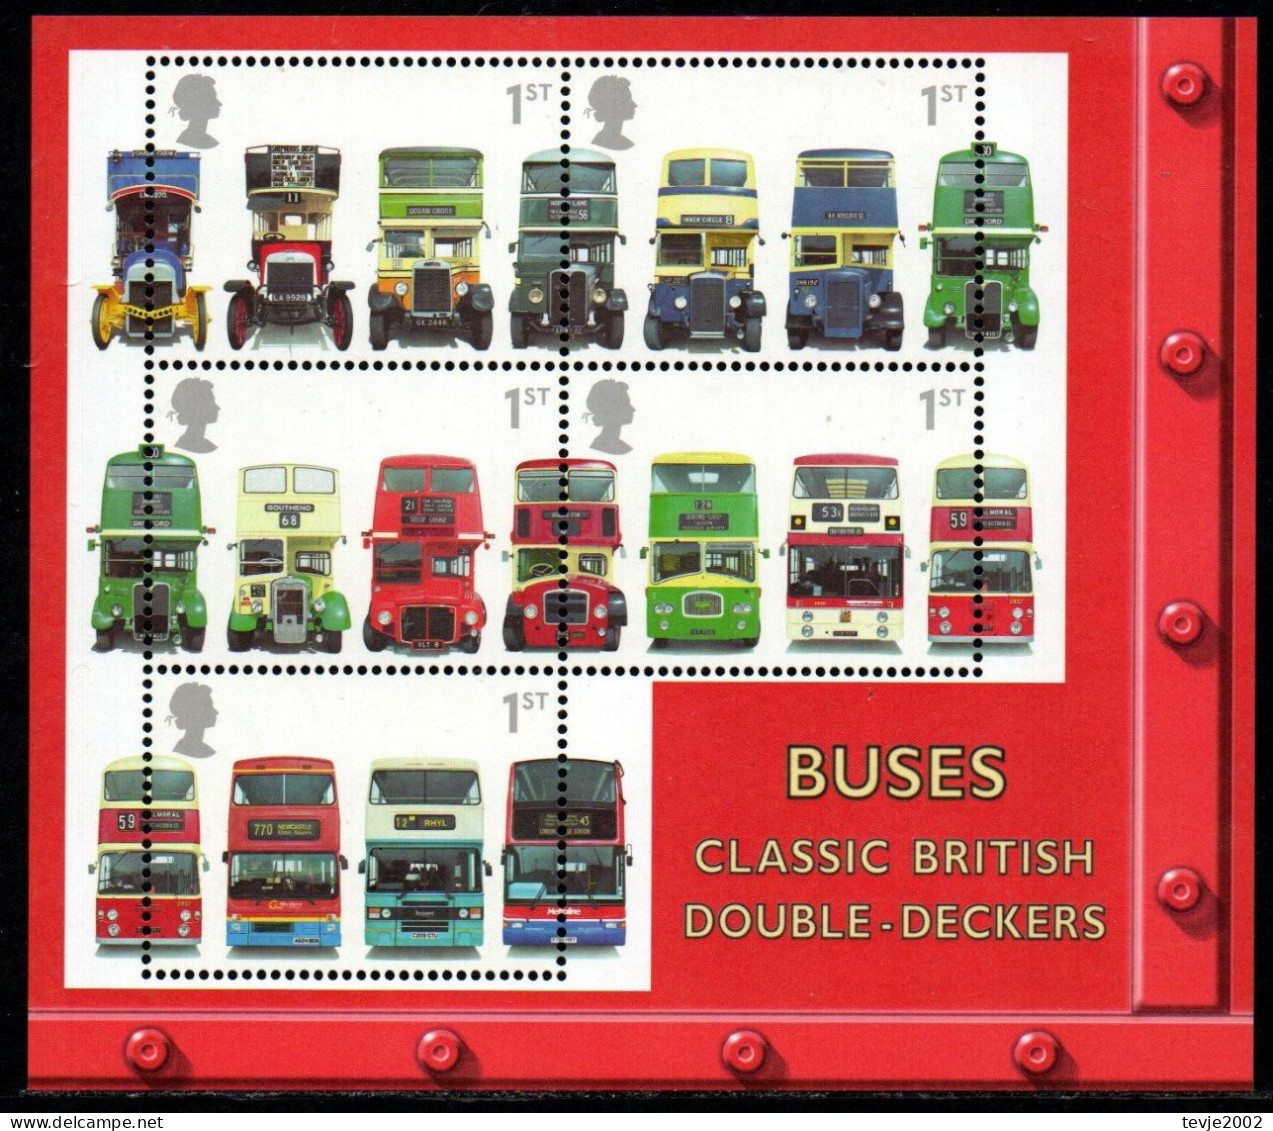 Großbritannien 2001 - Mi.Nr. Block 11 - Postfrisch MNH - Busse Buses - Busses